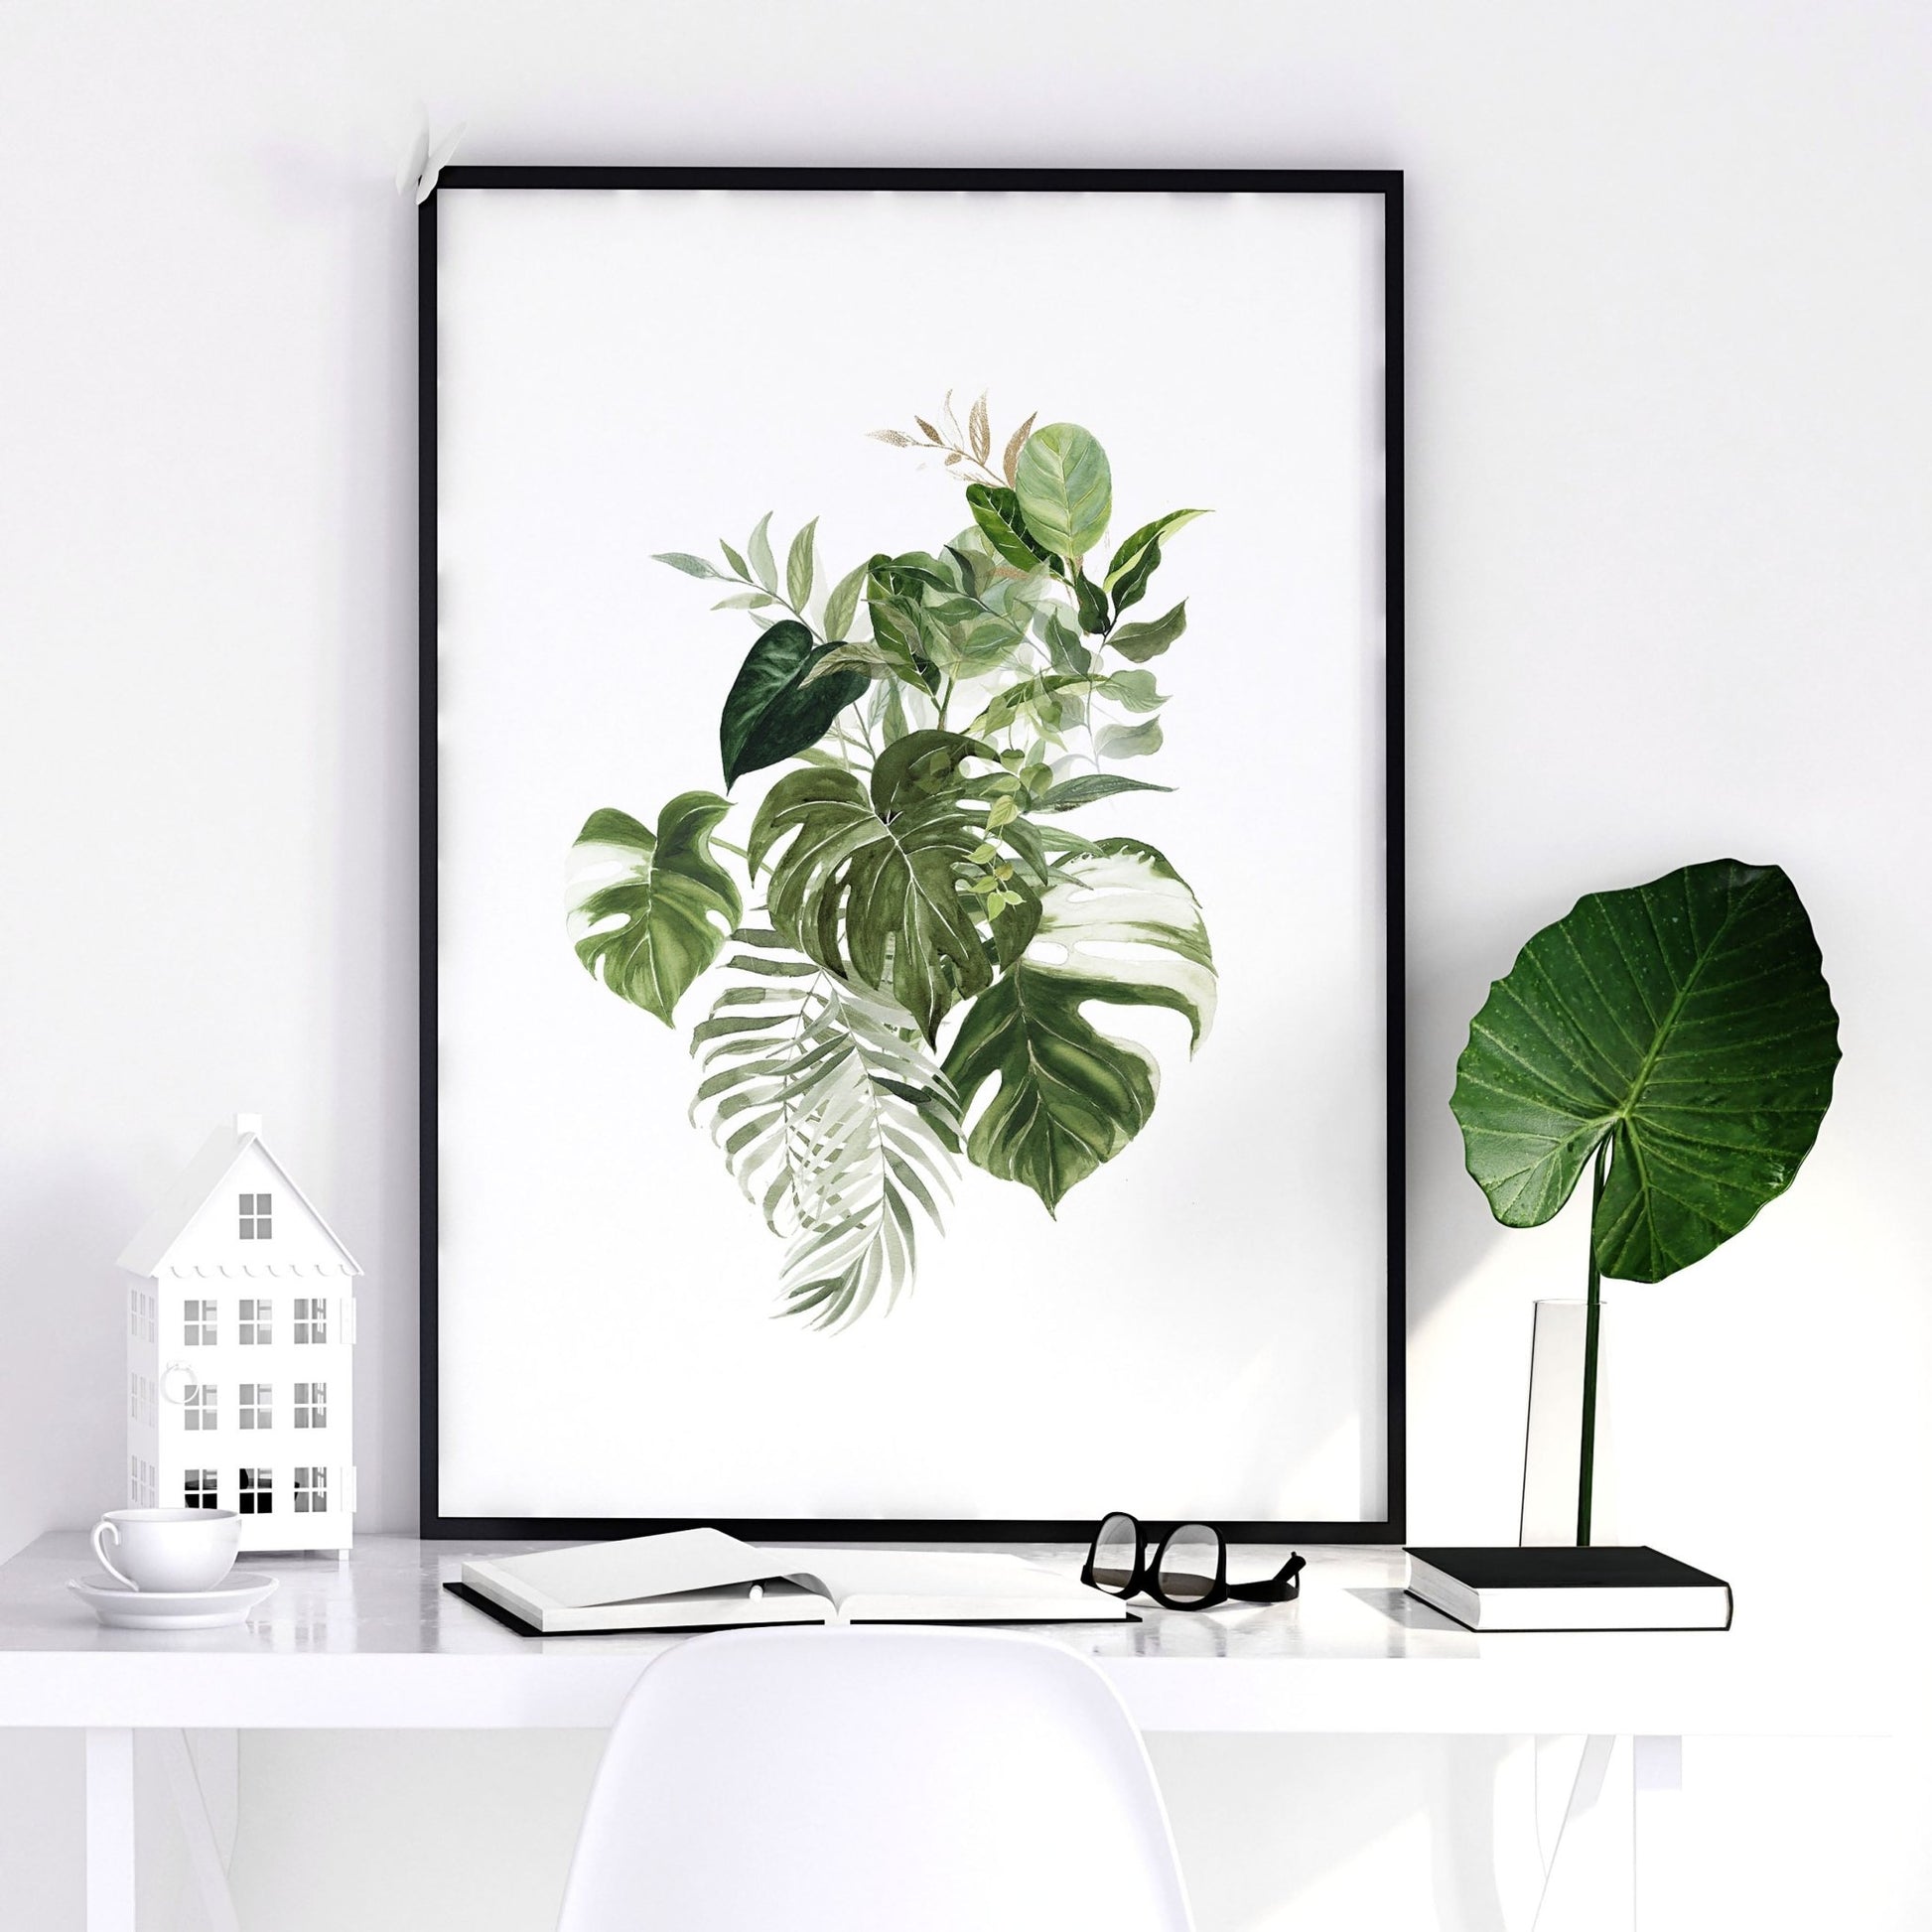 Botanical prints | set of 3 wall art prints - About Wall Art